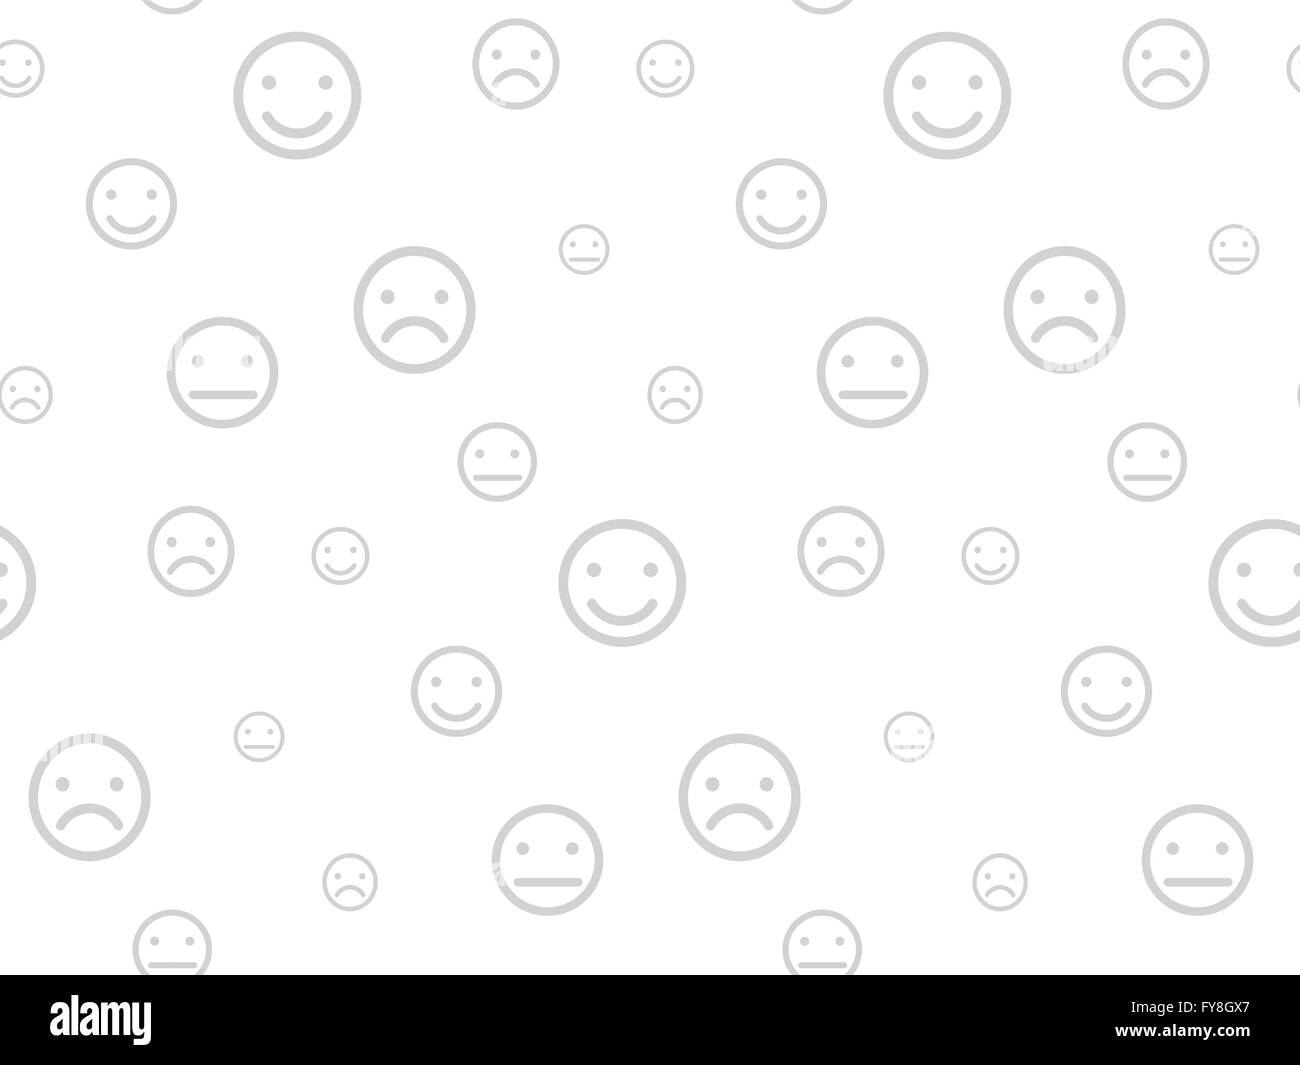 Smileys seamless background vector illustration Illustration de Vecteur